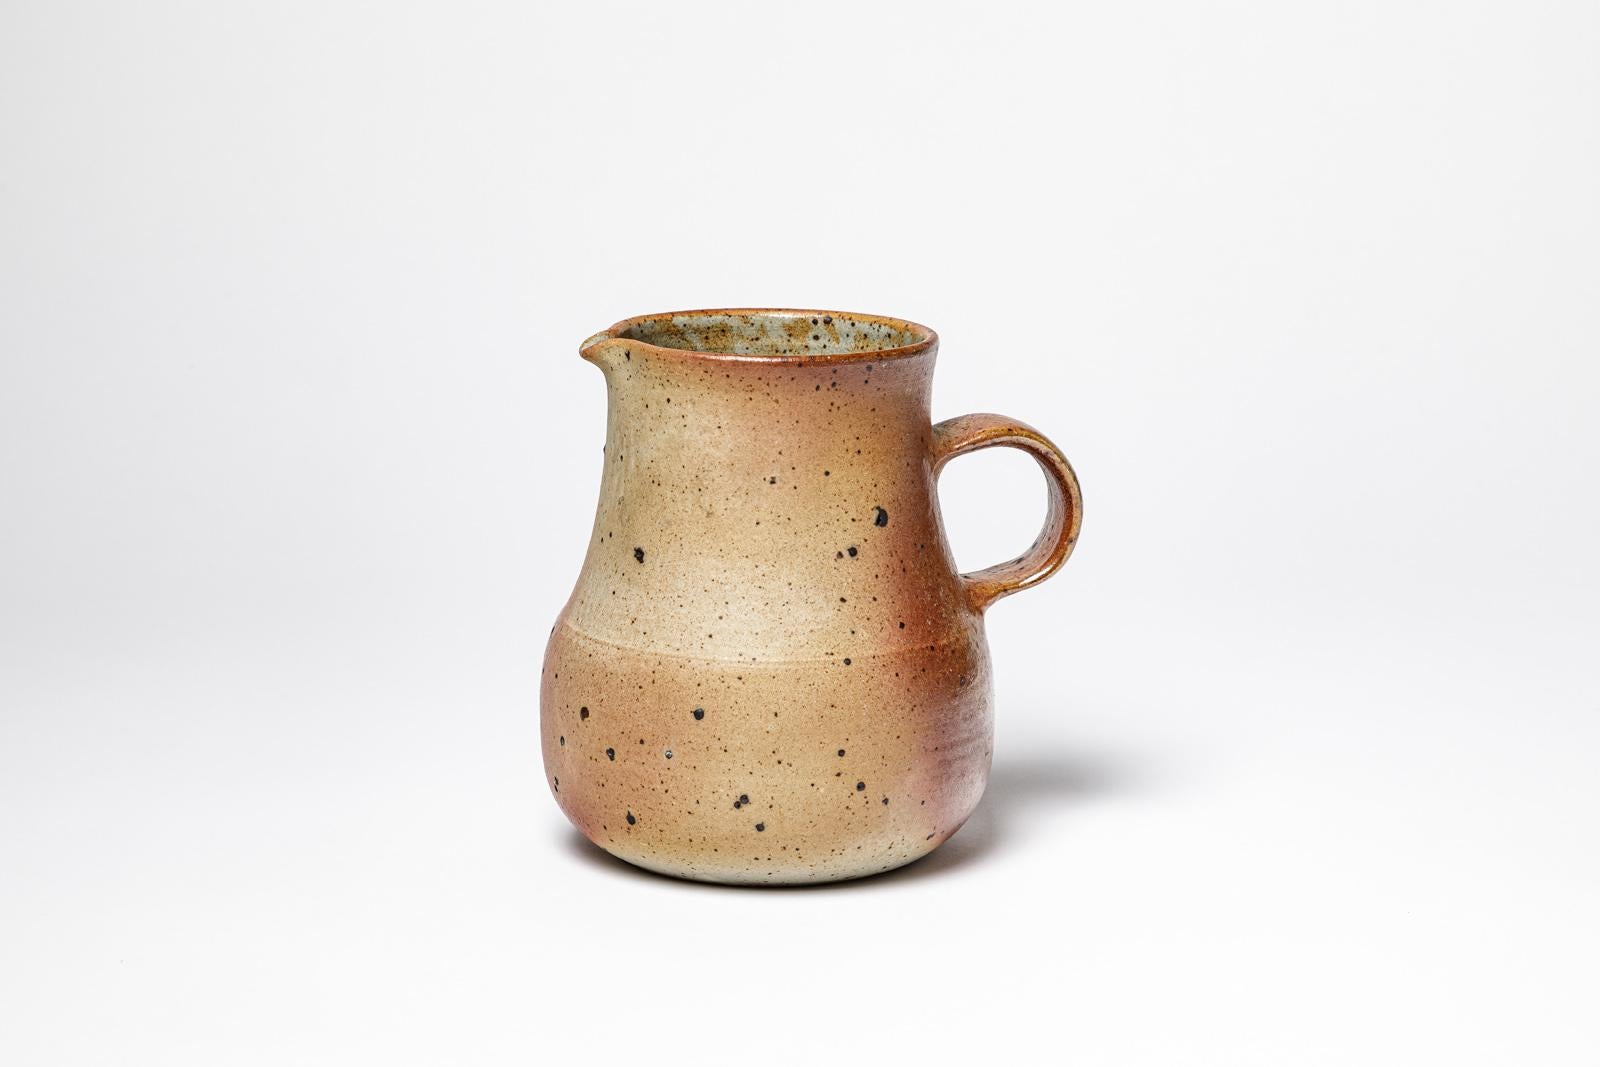 Montreau Lohof - La Borne

Large stoneware ceramic pitcher 

Realised circa 1960

Unique handmade brown and grey ceramic piece

Original perfect condition

Height 17 cm
Large 17 cm